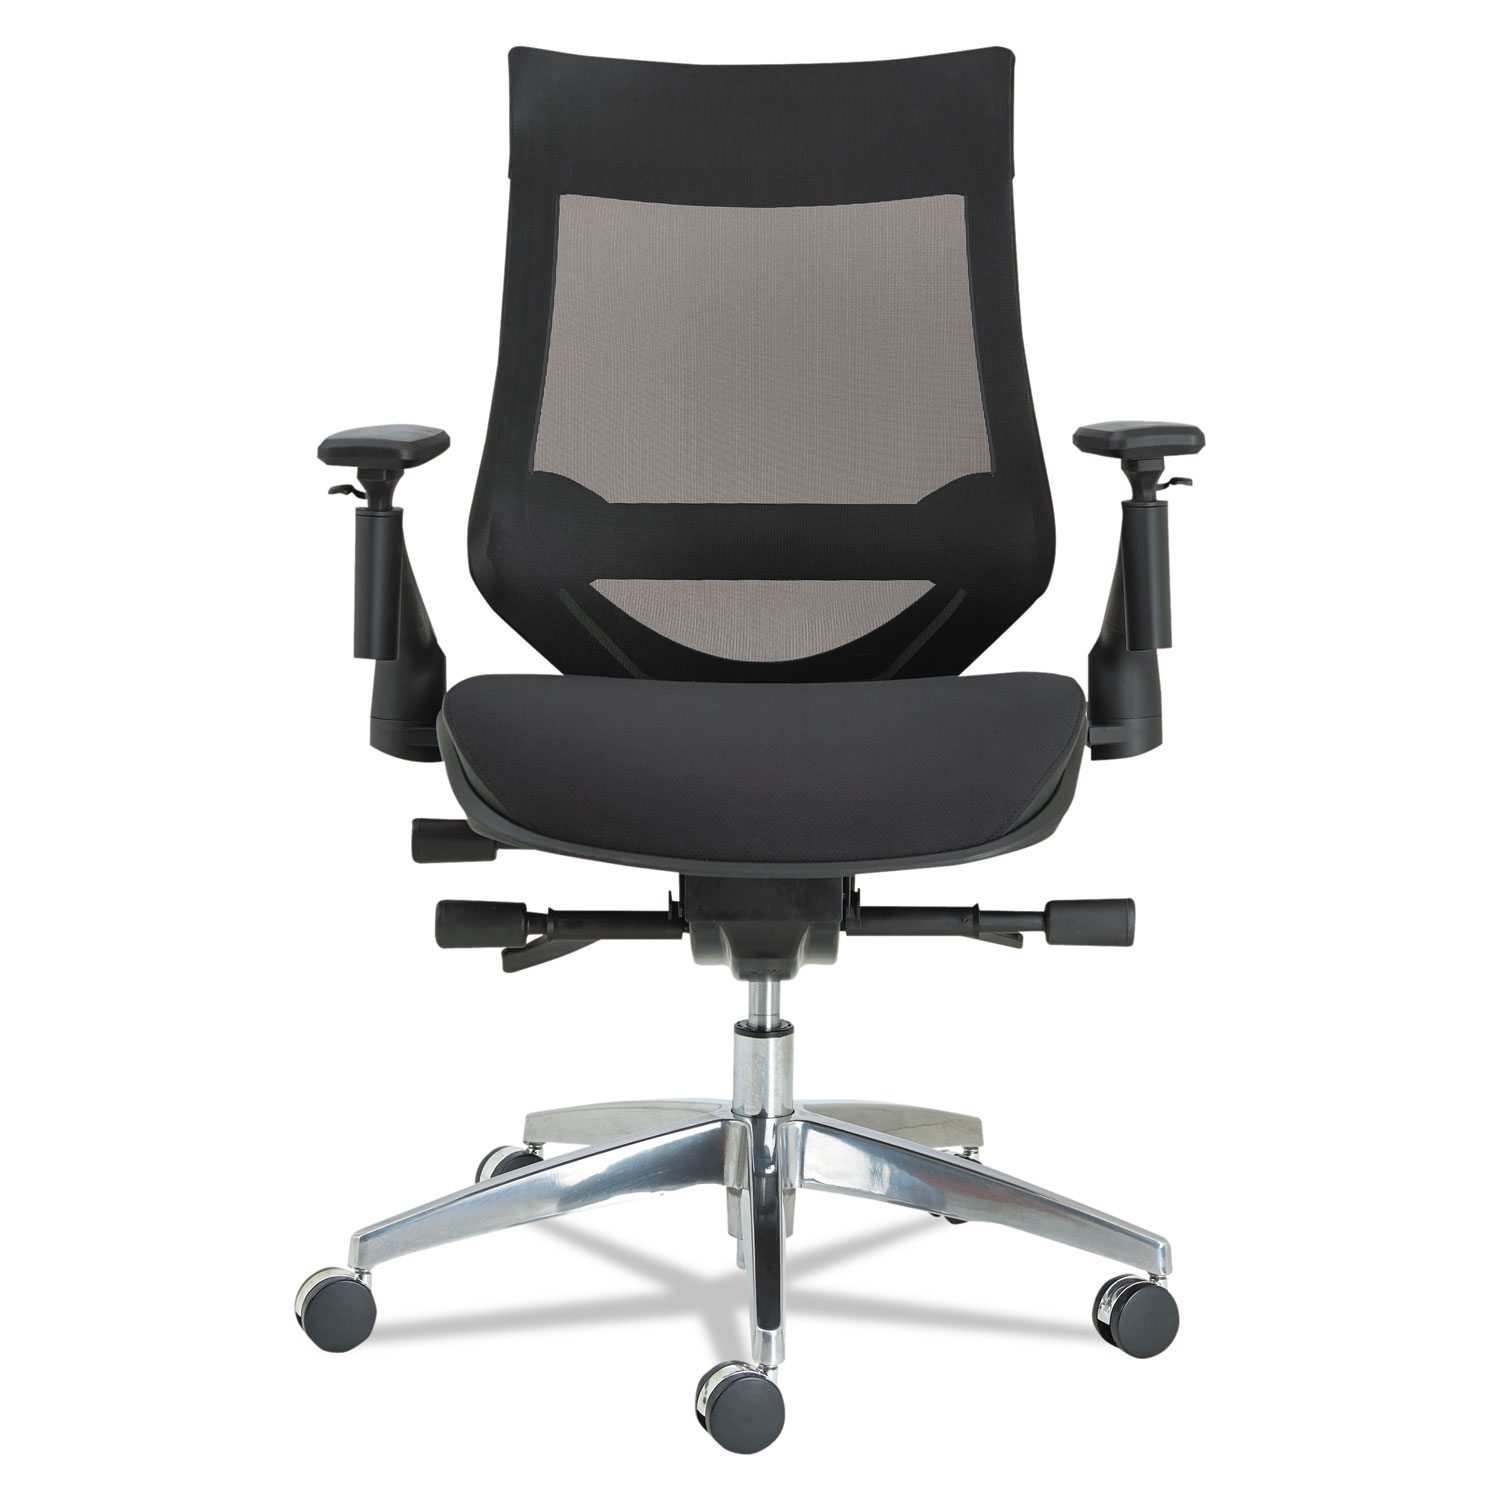 Alera EB-W Series Pivot Arm Multifunction Mesh Chair, Supports up to 275 lbs., Black Seat/Black Back, Aluminum Base